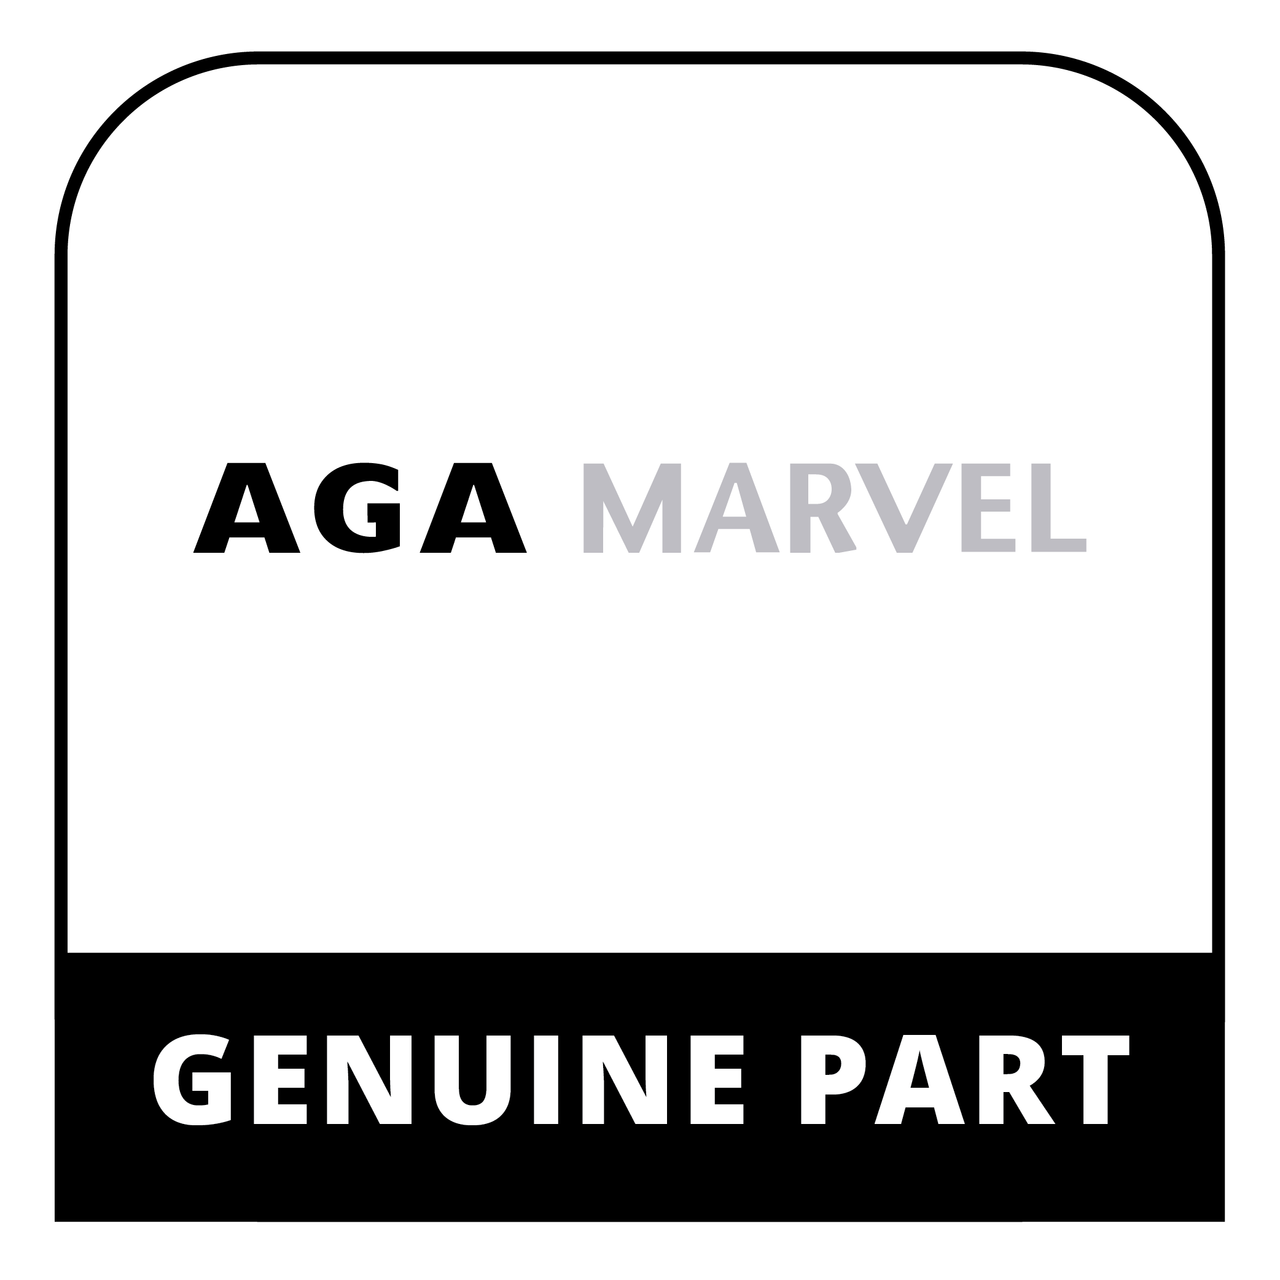 AGA Marvel S31580-004 - Door Gasket - Genuine AGA Marvel Part